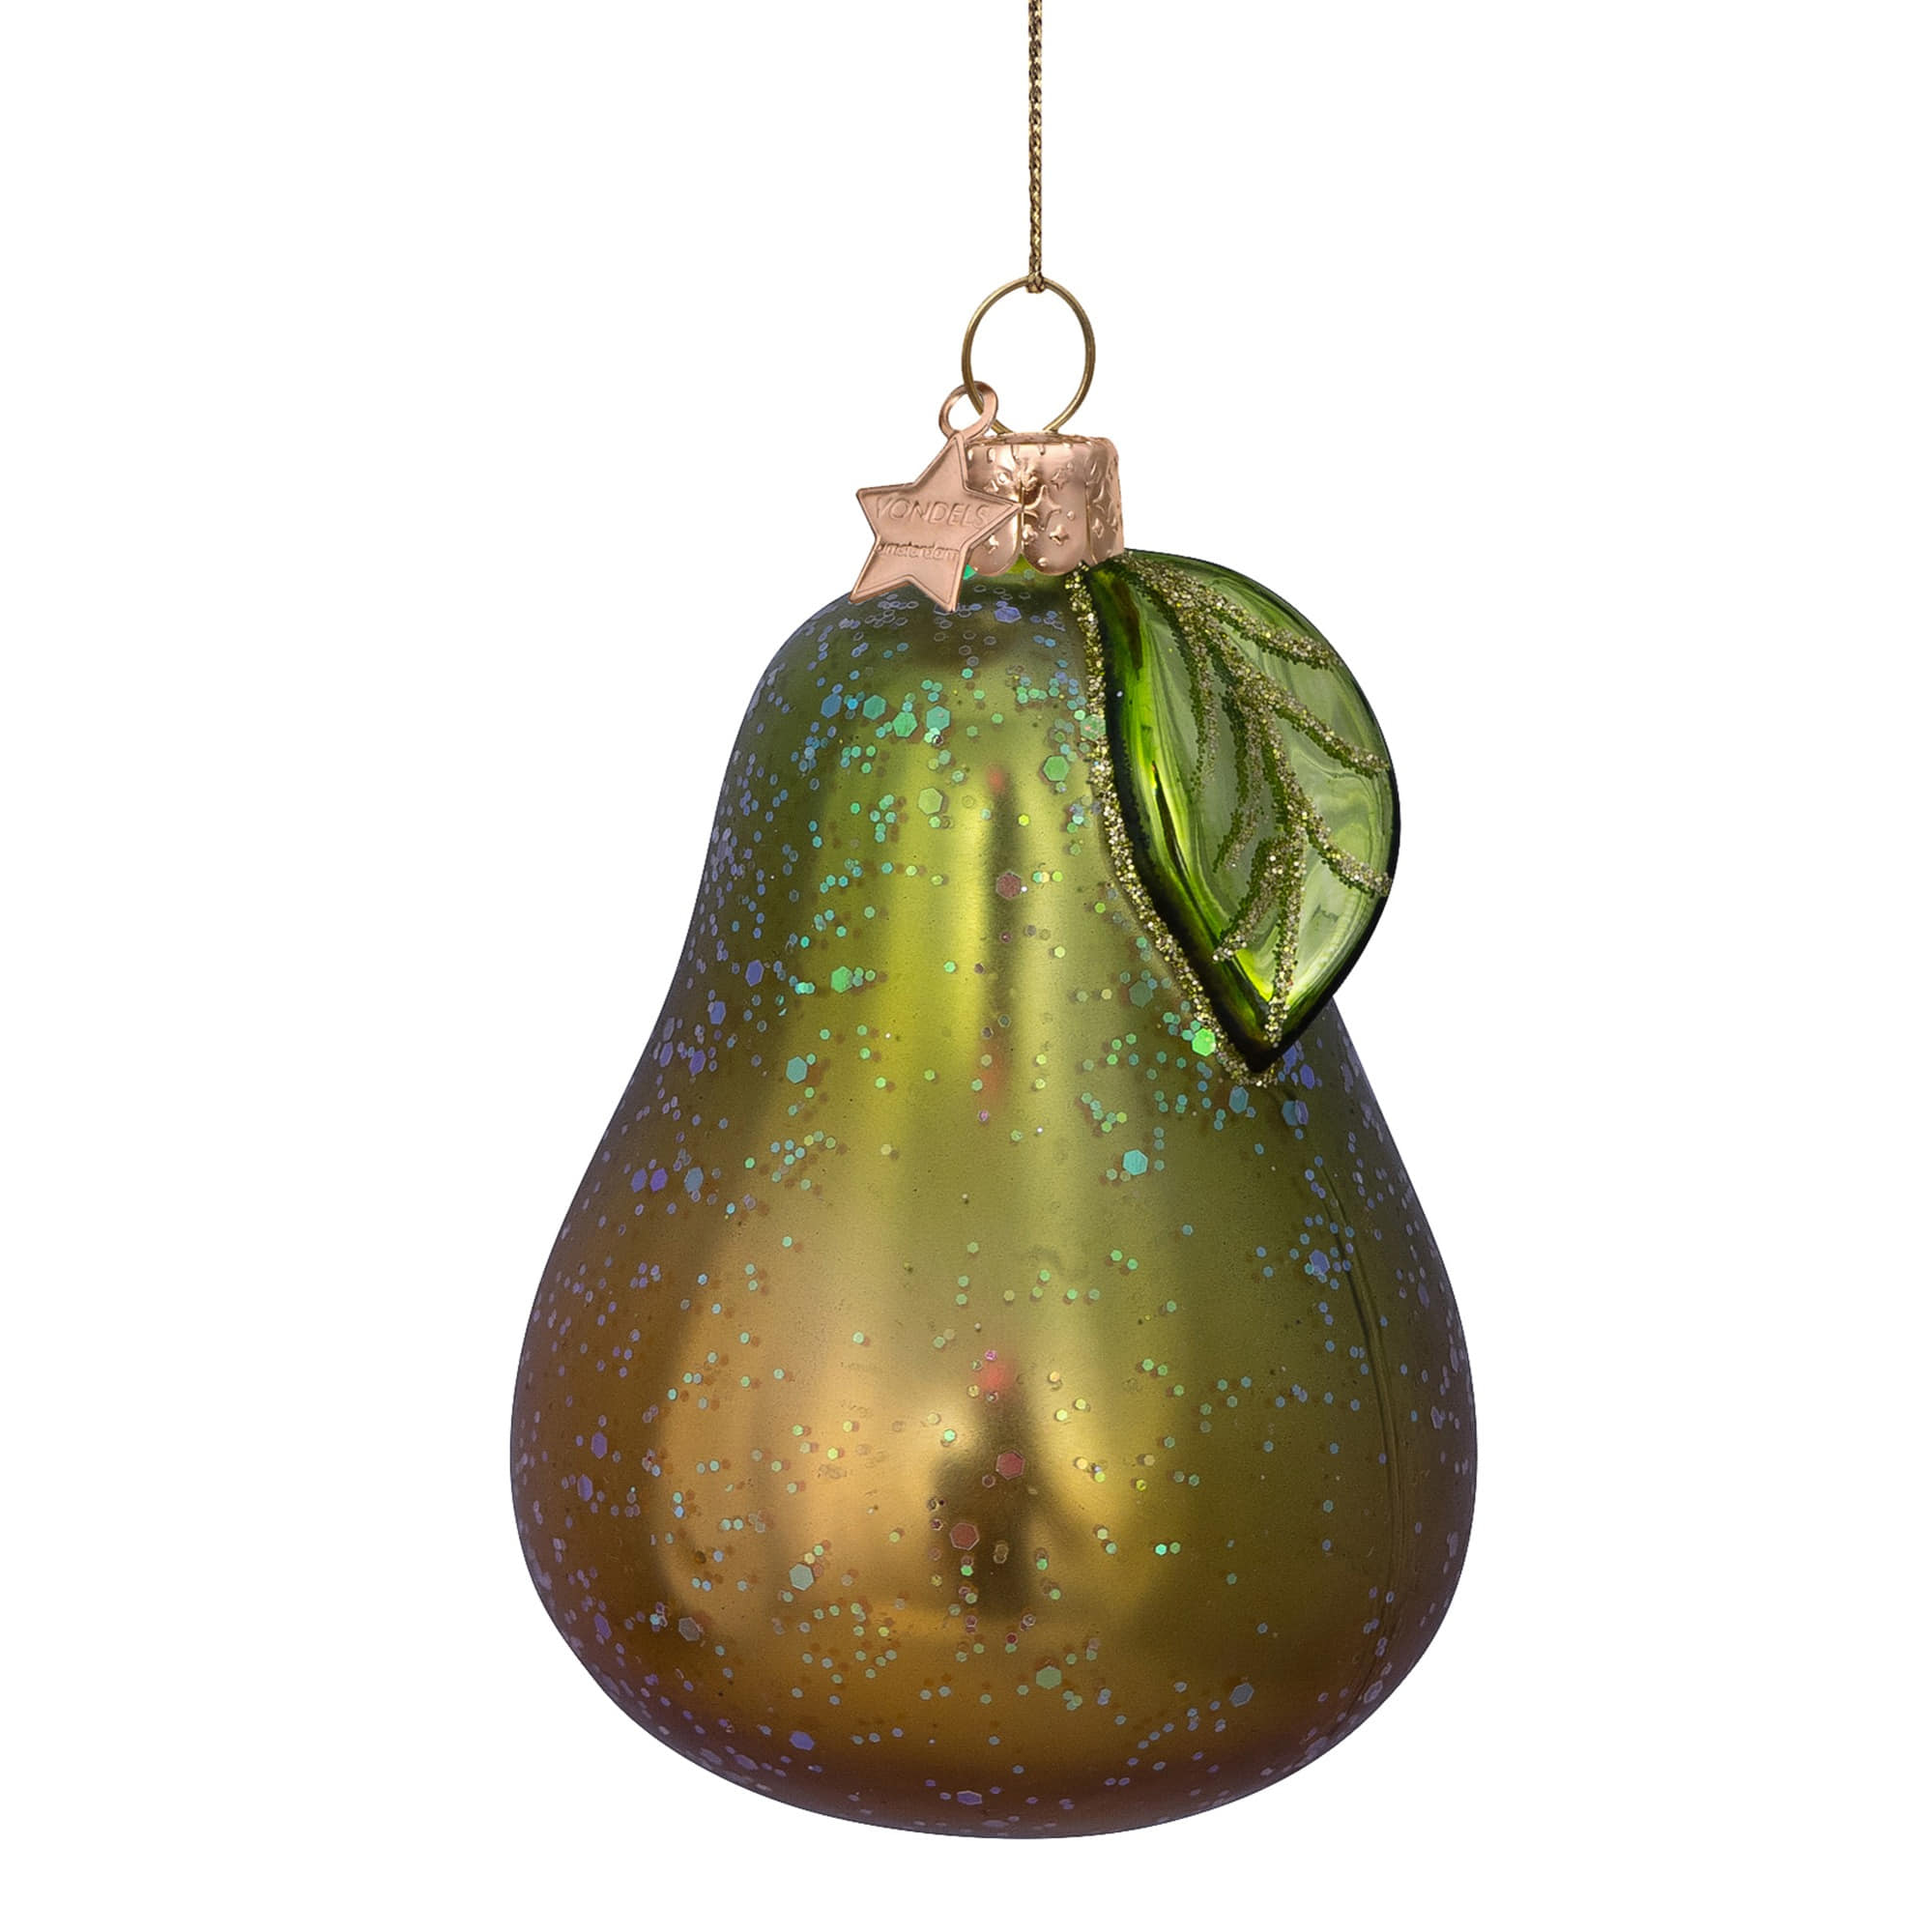 VONDELS Ornament Glass Green Pear Leaf